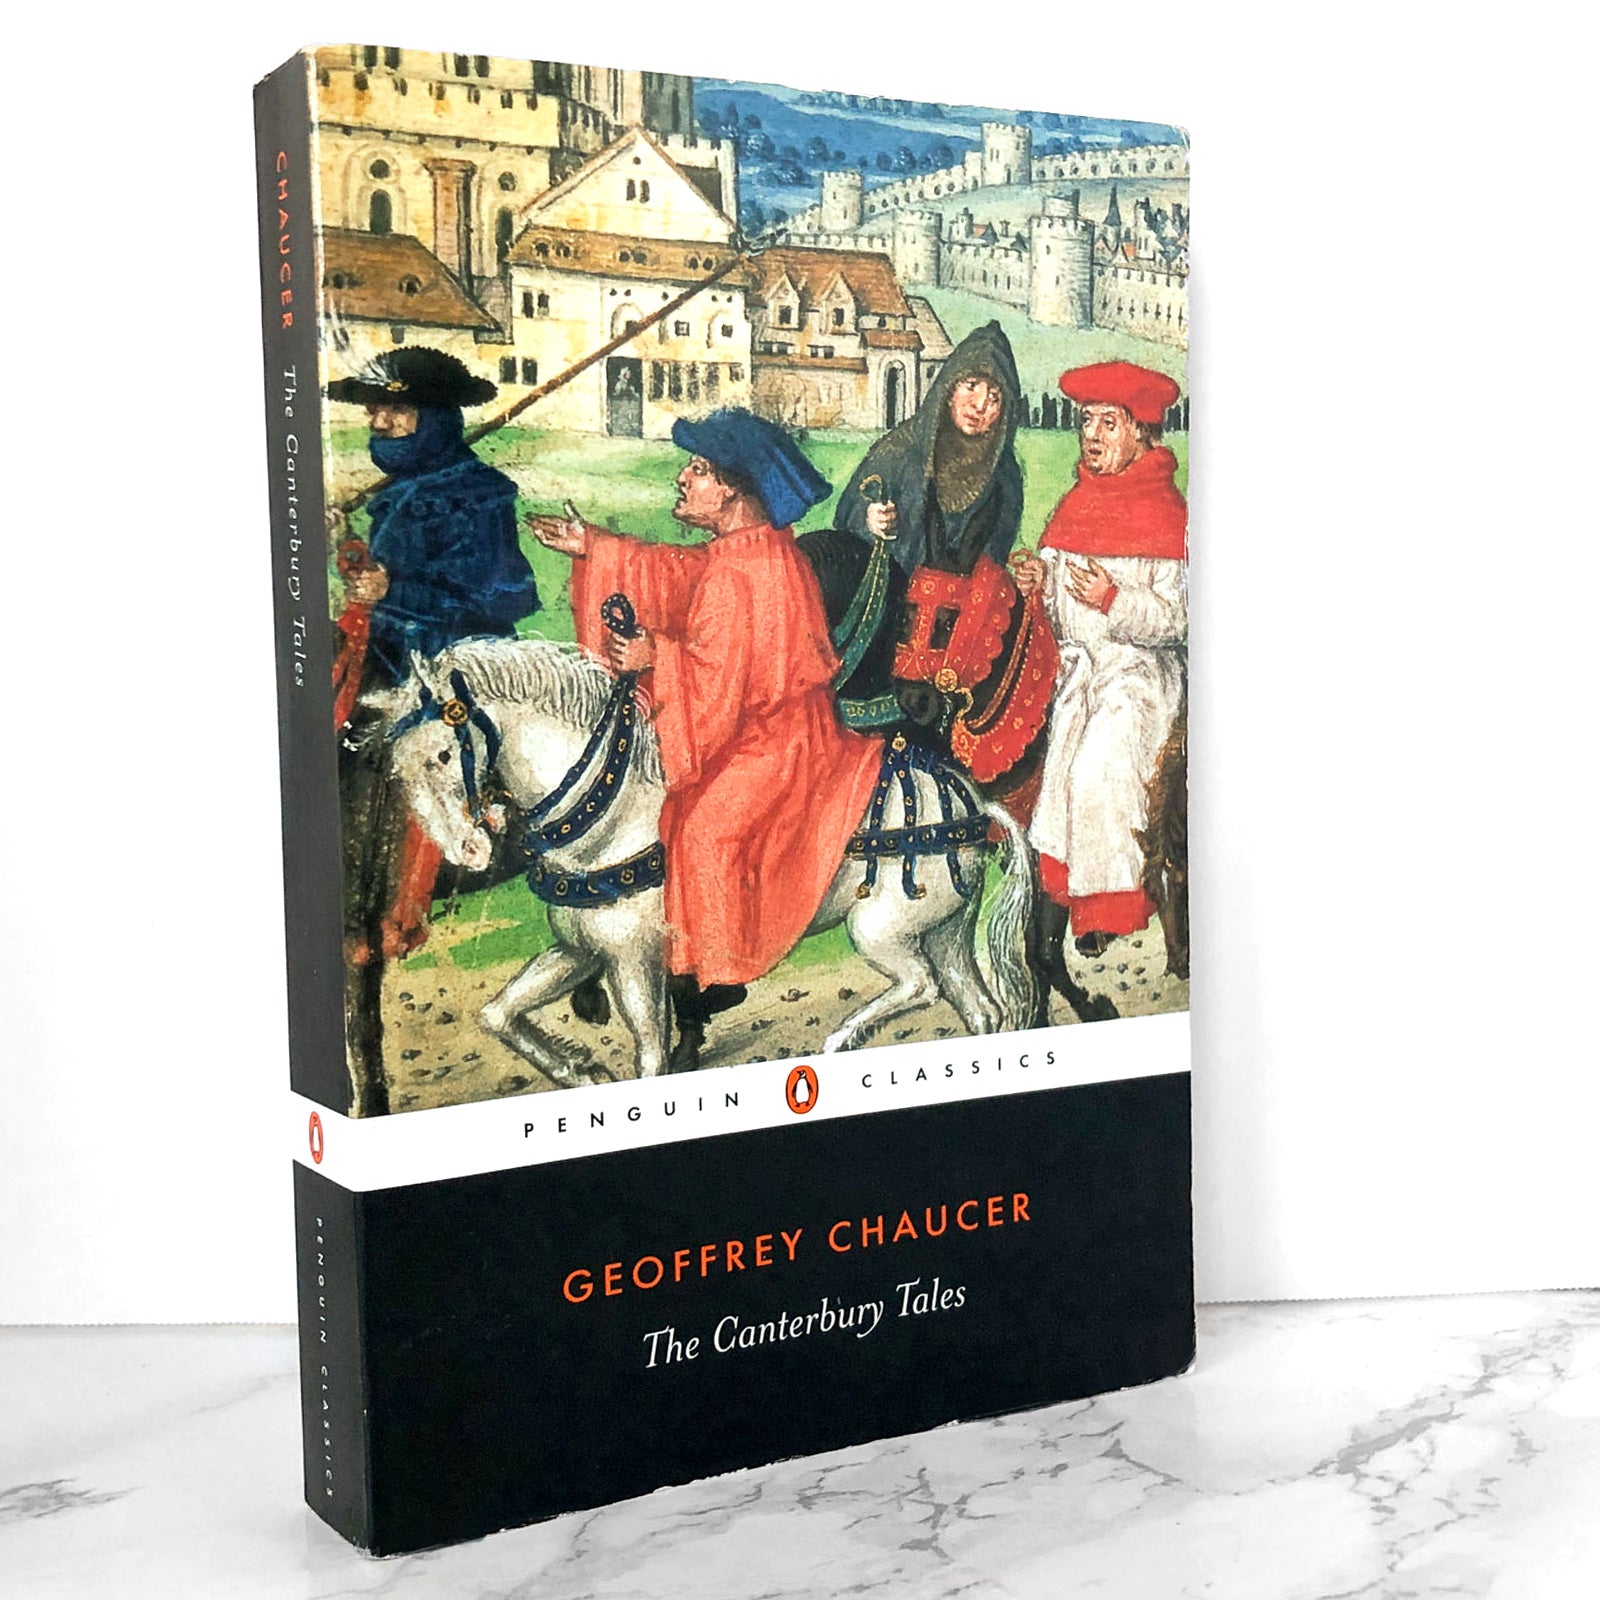 exposición provocar gobierno The Canterbury Tales by Geoffrey Chaucer [PENGUIN TRADE PAPERBACK / 19